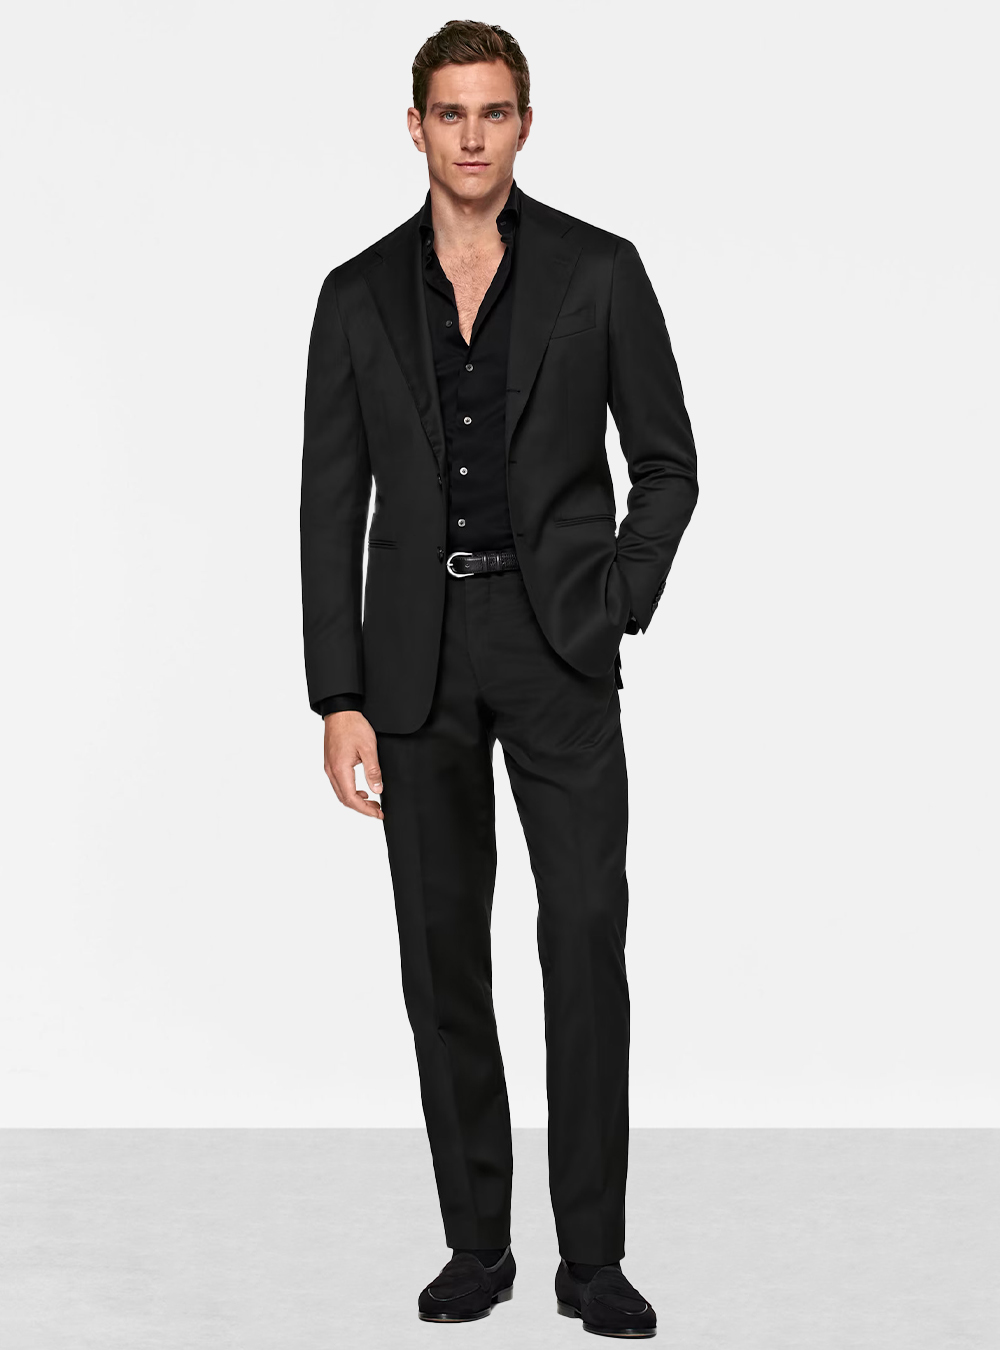 Black suit, black dress shirt and black suede loafers